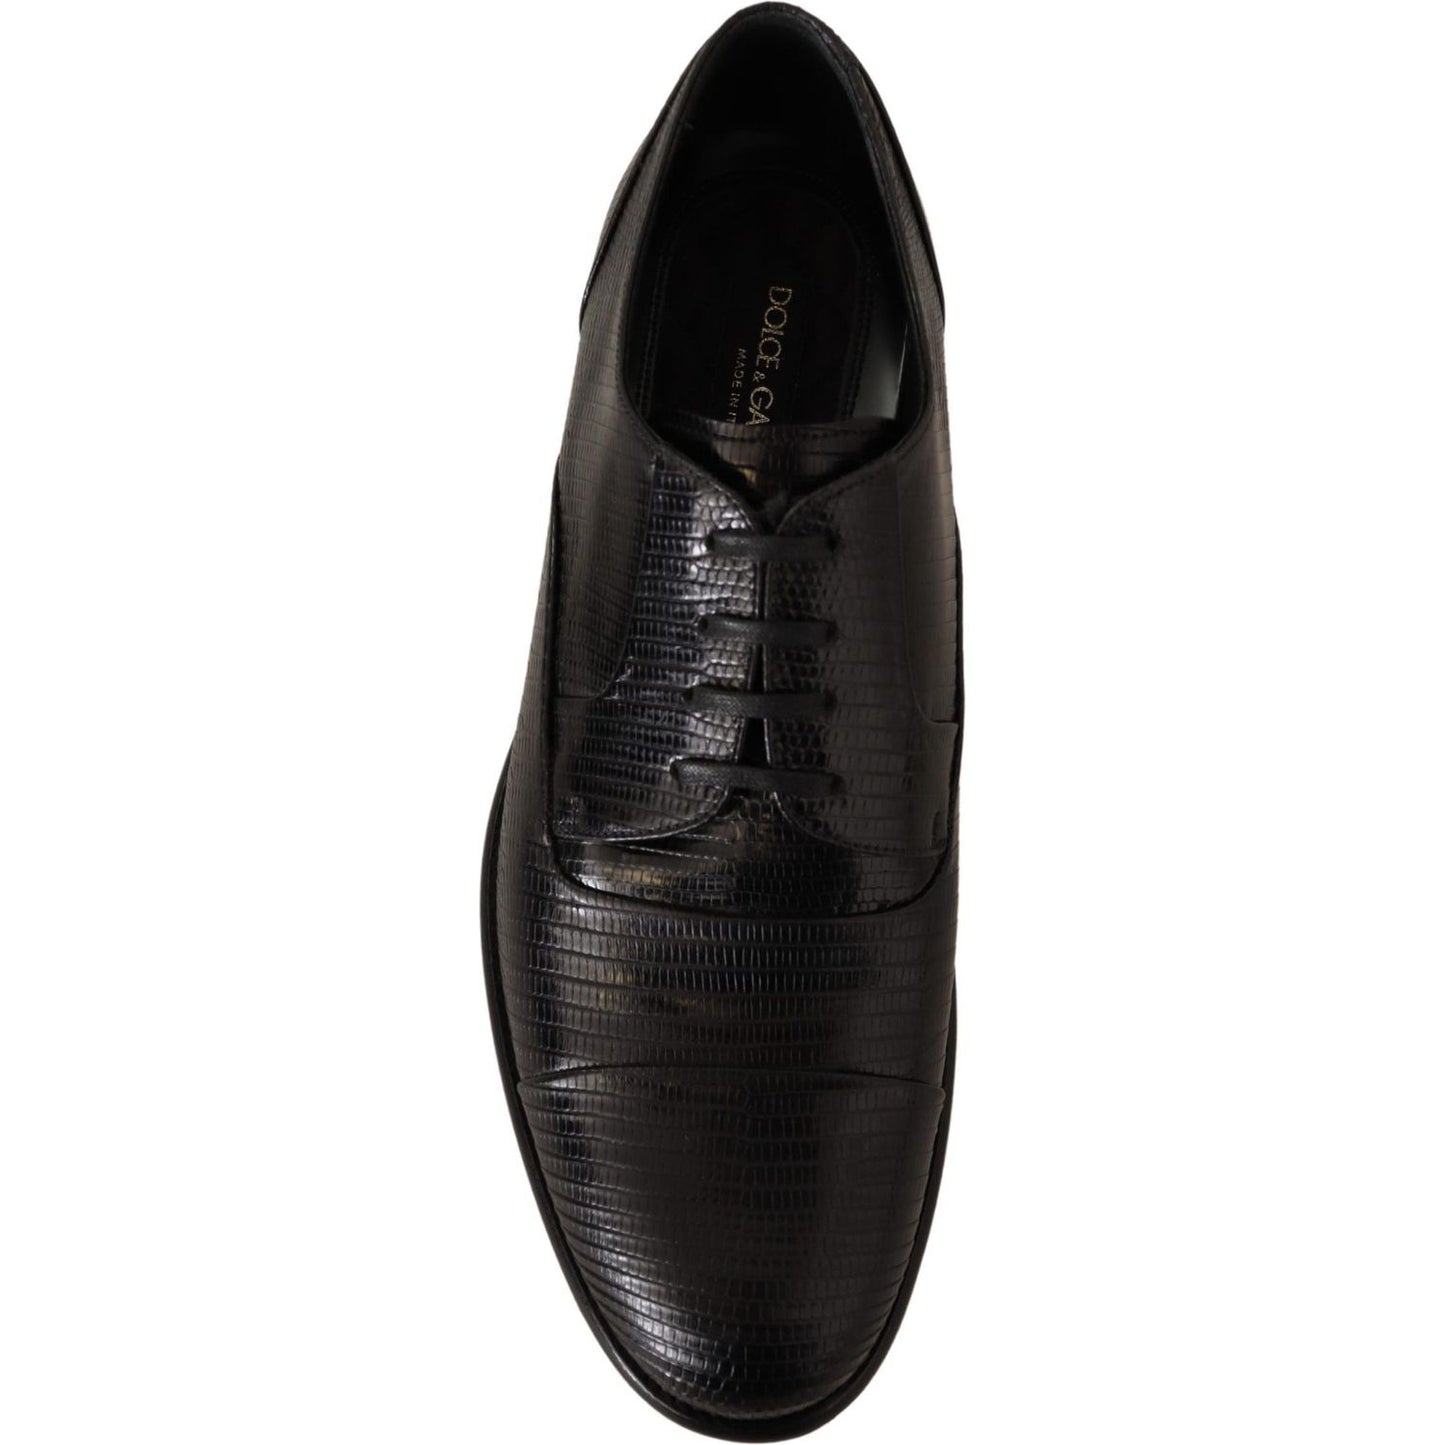 Dolce & Gabbana Elegant Black Lizard Skin Derby Shoes black-lizard-leather-derby-dress-shoes Dress Shoes IMG_9235-scaled-89efa96c-b43.jpg